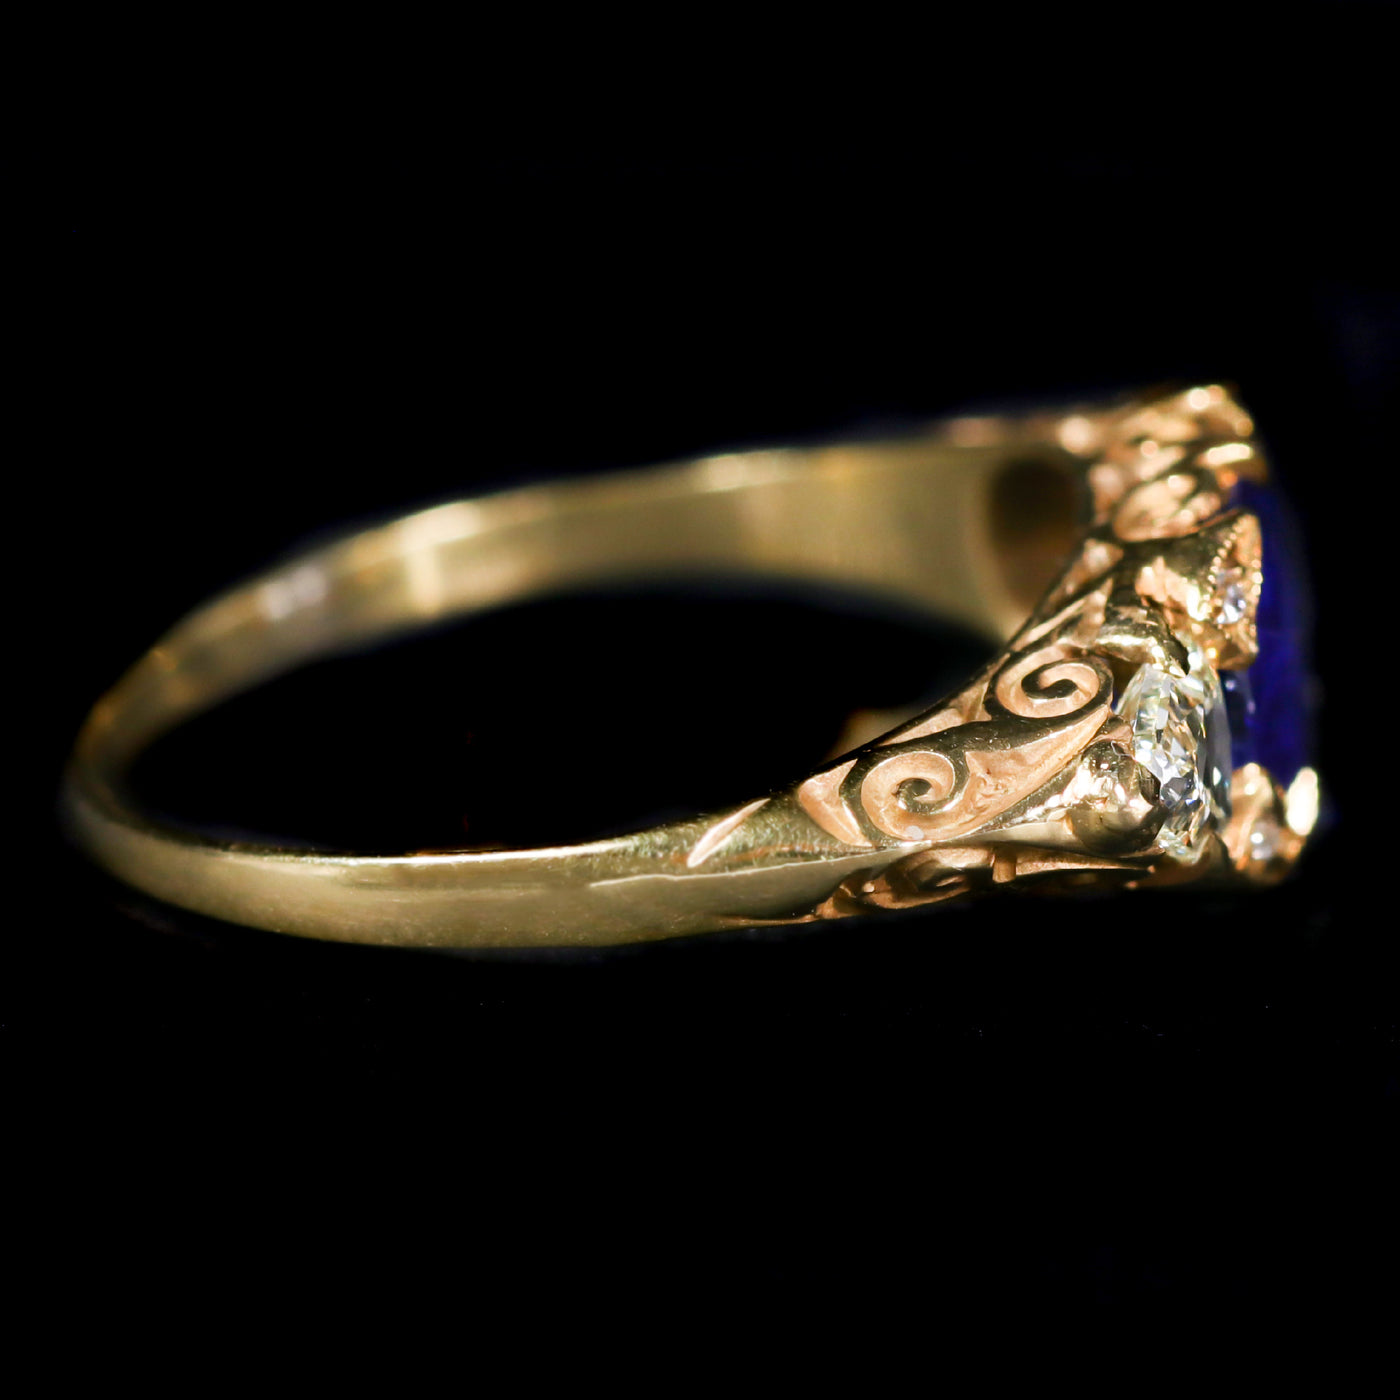 Victorian 18K Yellow Gold 2.21 Carat Sapphire and Diamond Ring